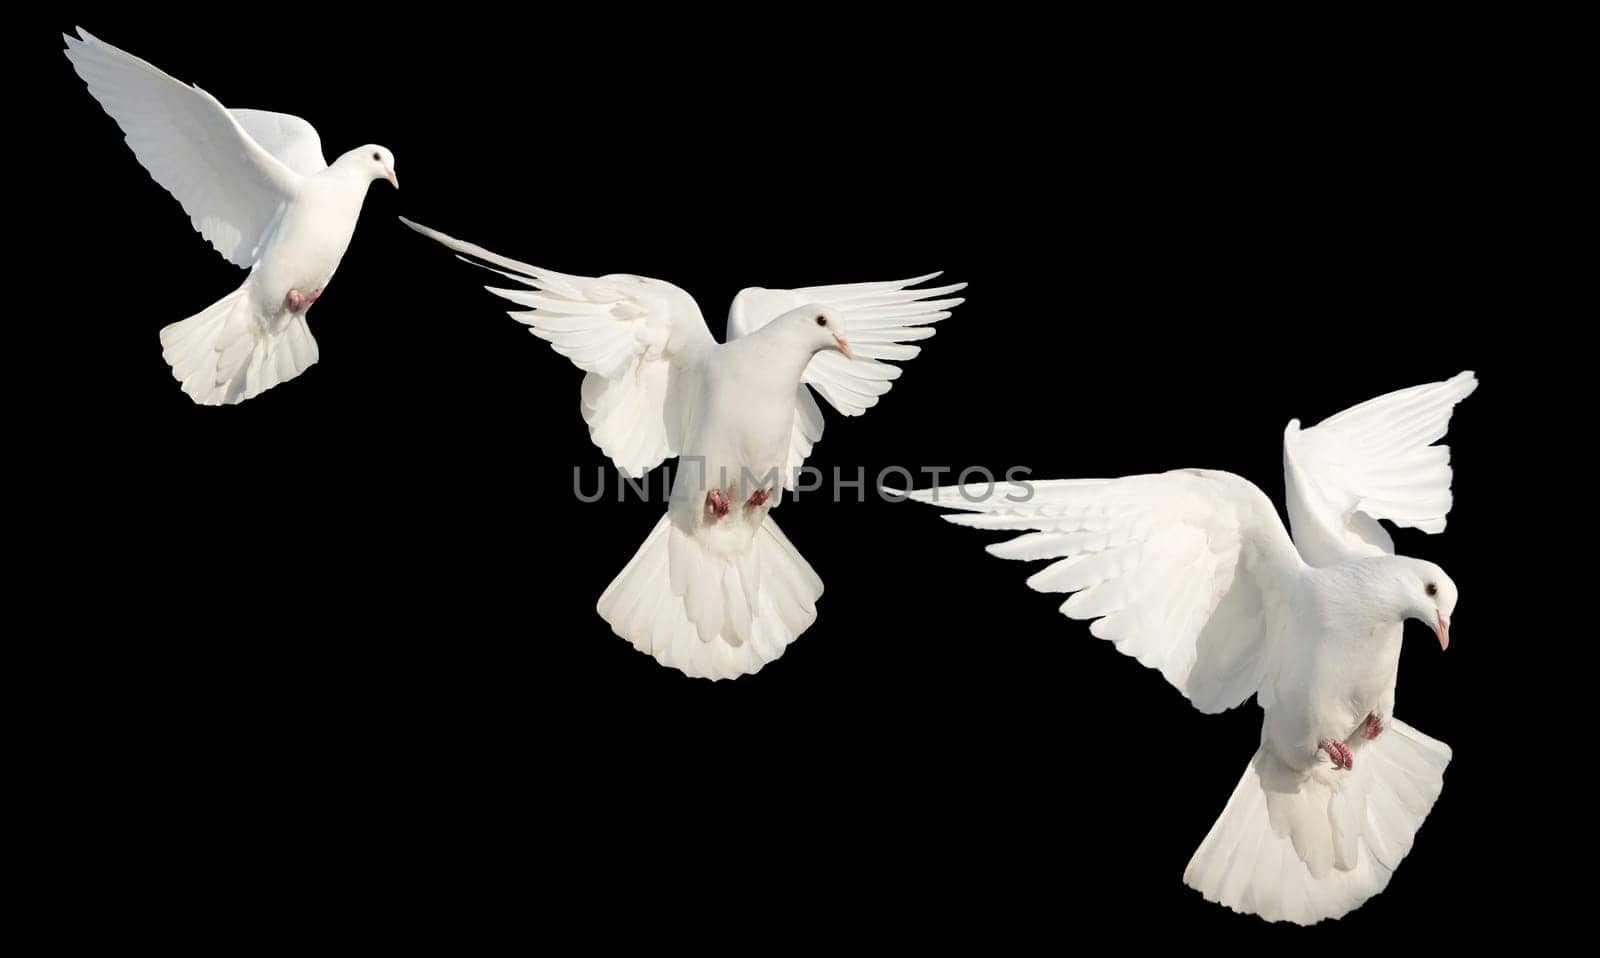 Islam sacred birds , white doves in flight on a black background by drakuliren